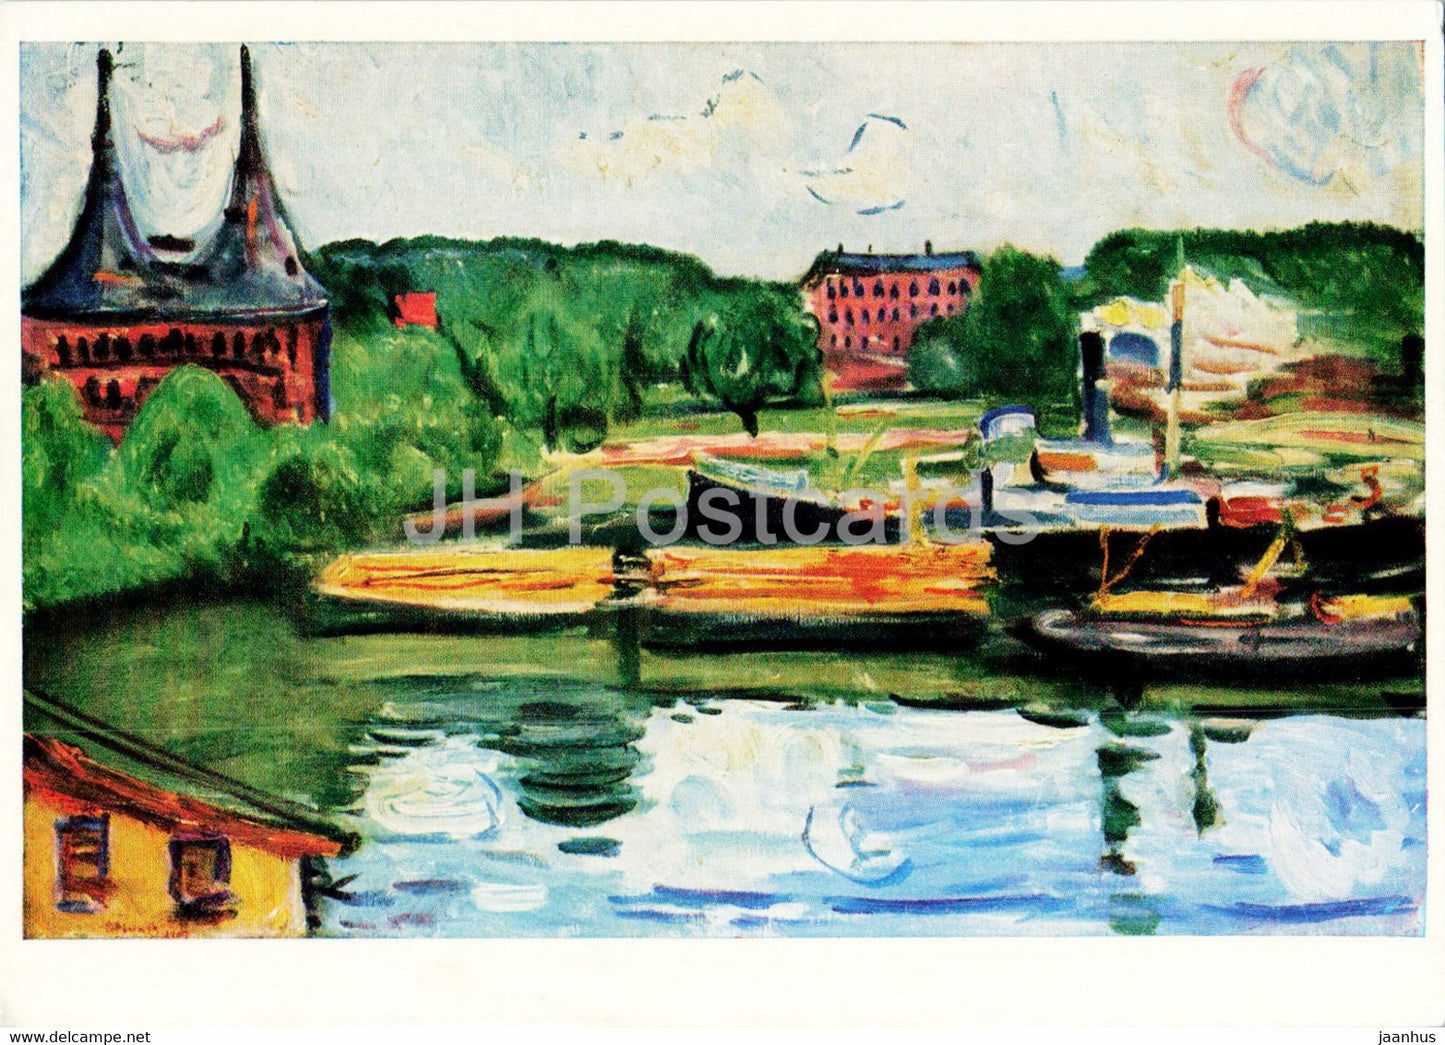 painting by Edvard Munch - Lubecker Hafen mit Holstentor - Lubeck Port - Norwegian art - Germany - used - JH Postcards